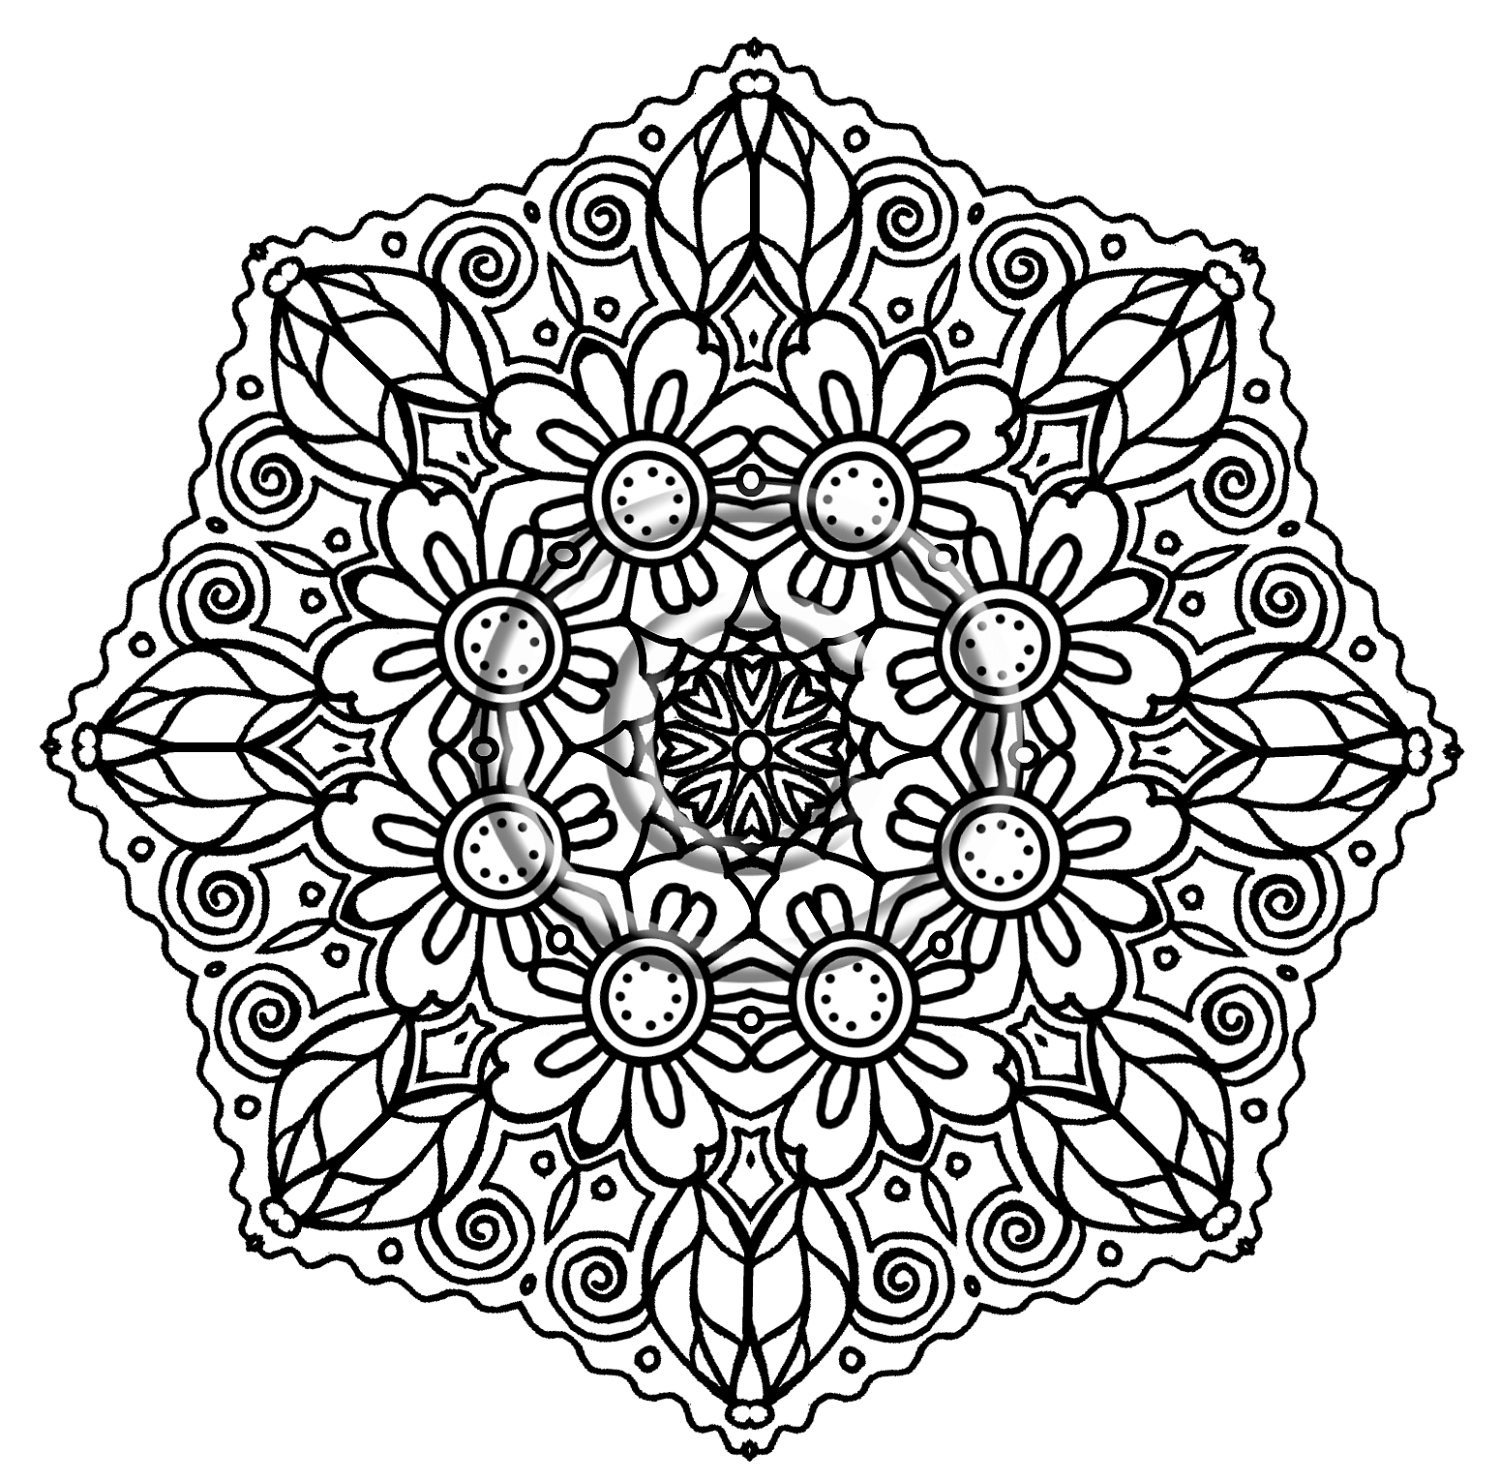 Advanced Mandala Coloring Pages | azspringtrainingexperience